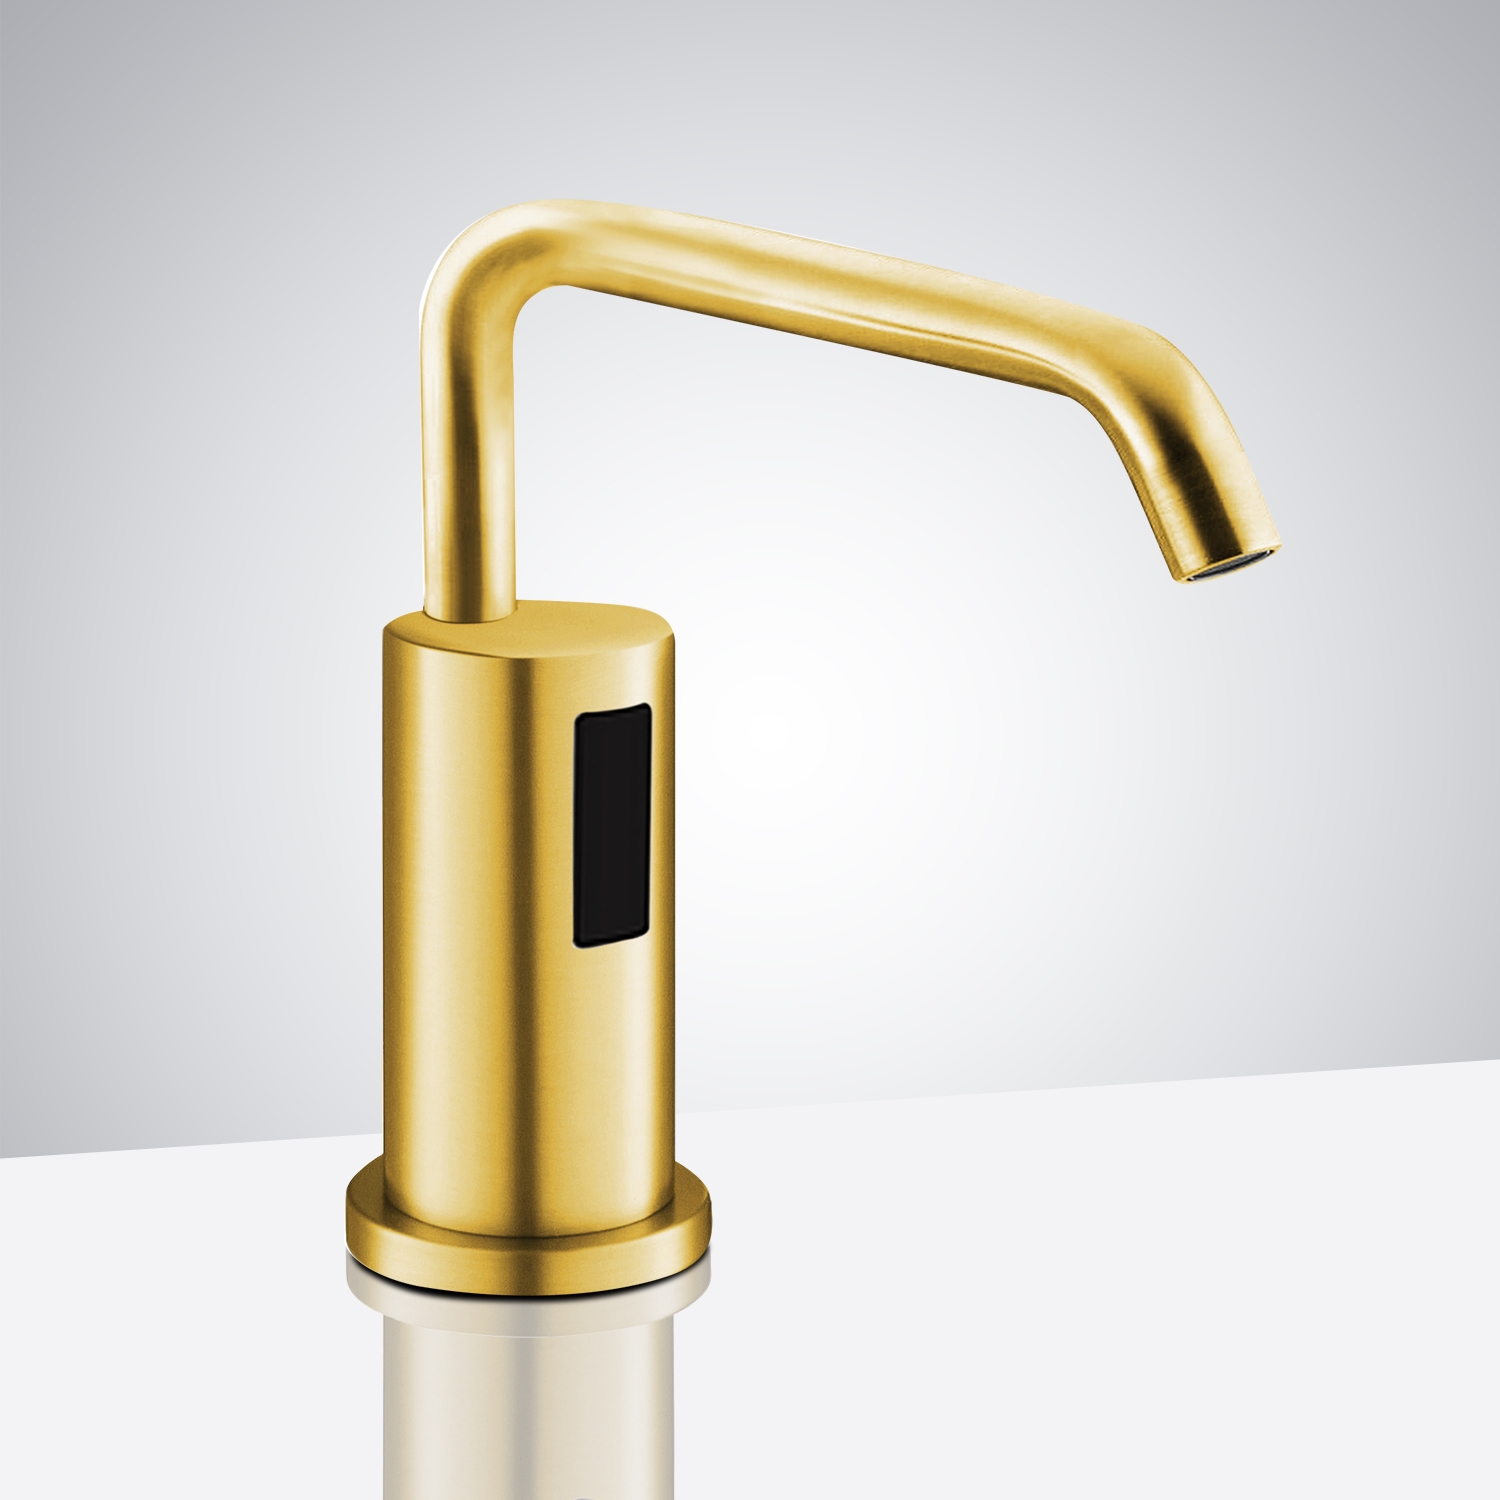 DUPLICATE Fontana Gold Leo Automatic Soap Dispenser - Deck Mounted Commercial Liquid Foam Soap Dispenser